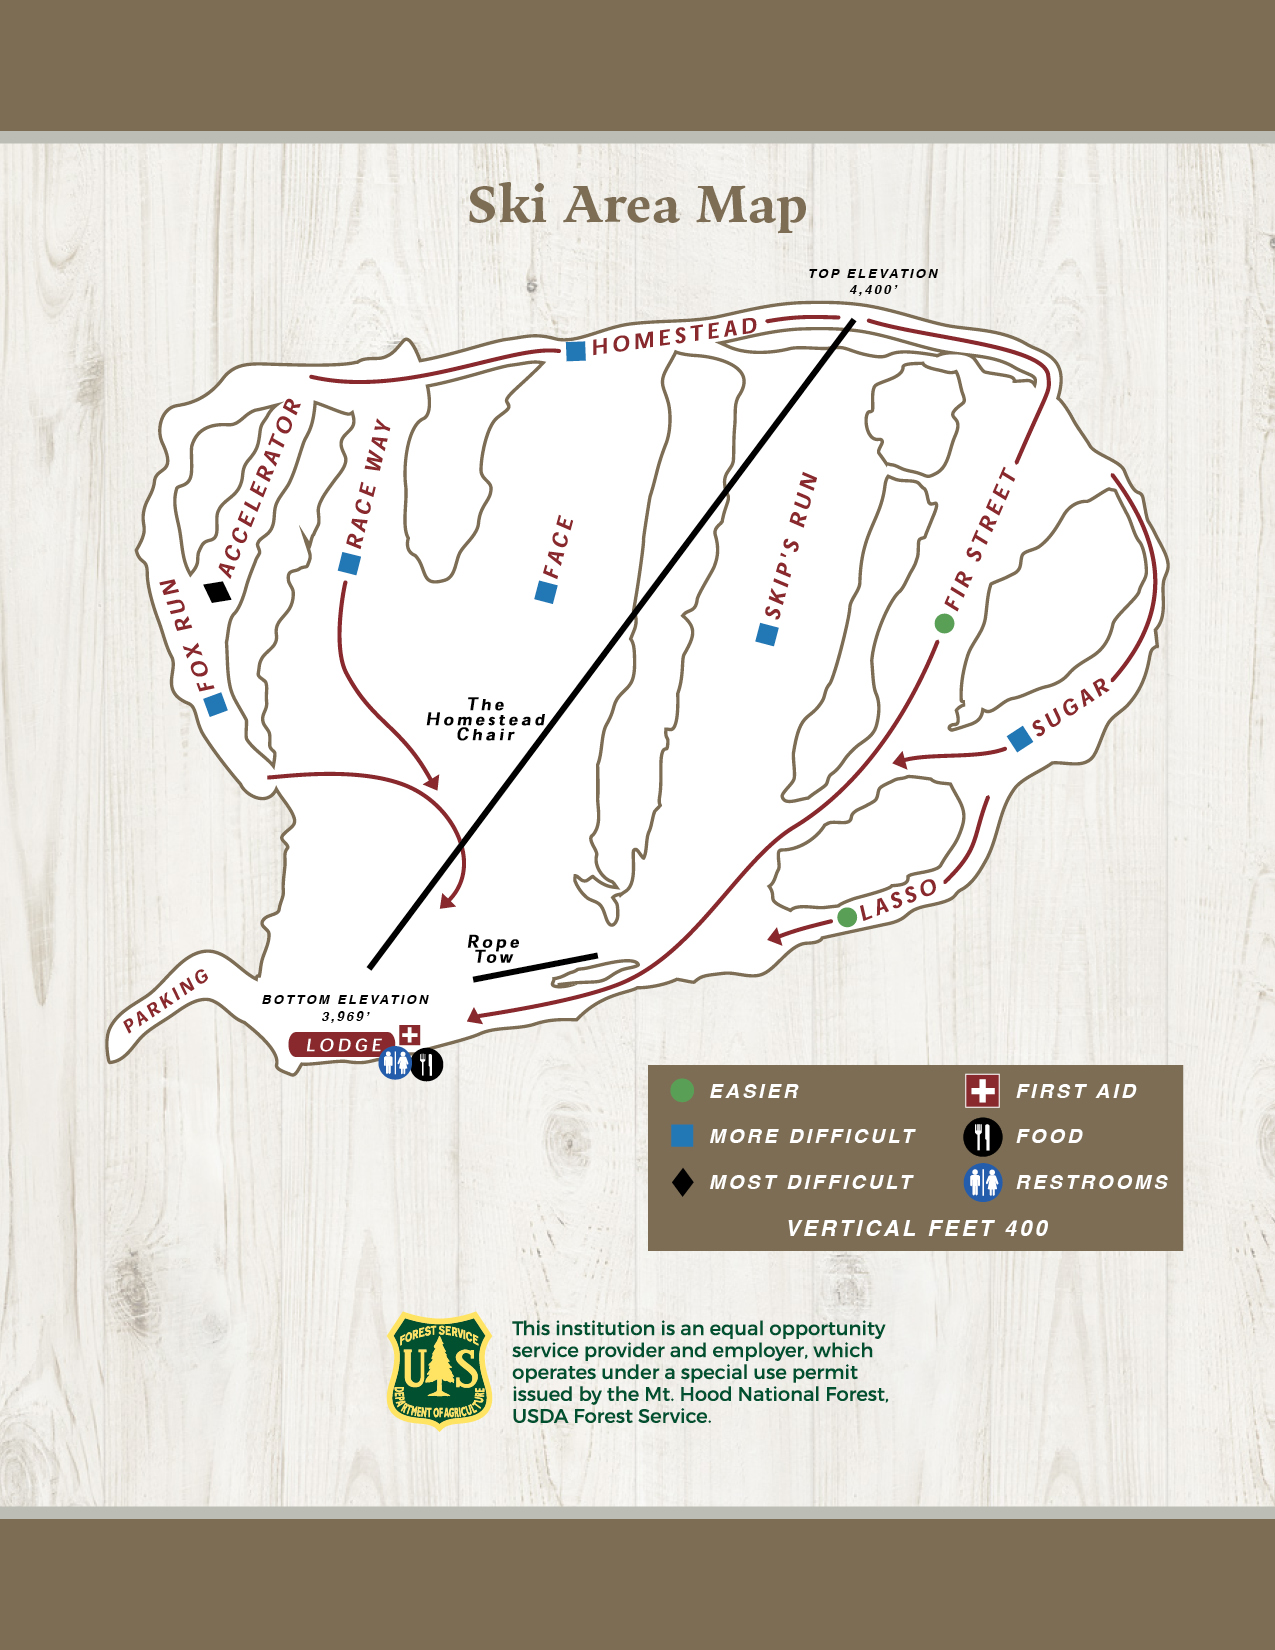 A ski trail map of Cooper Spur on Mt. Hood